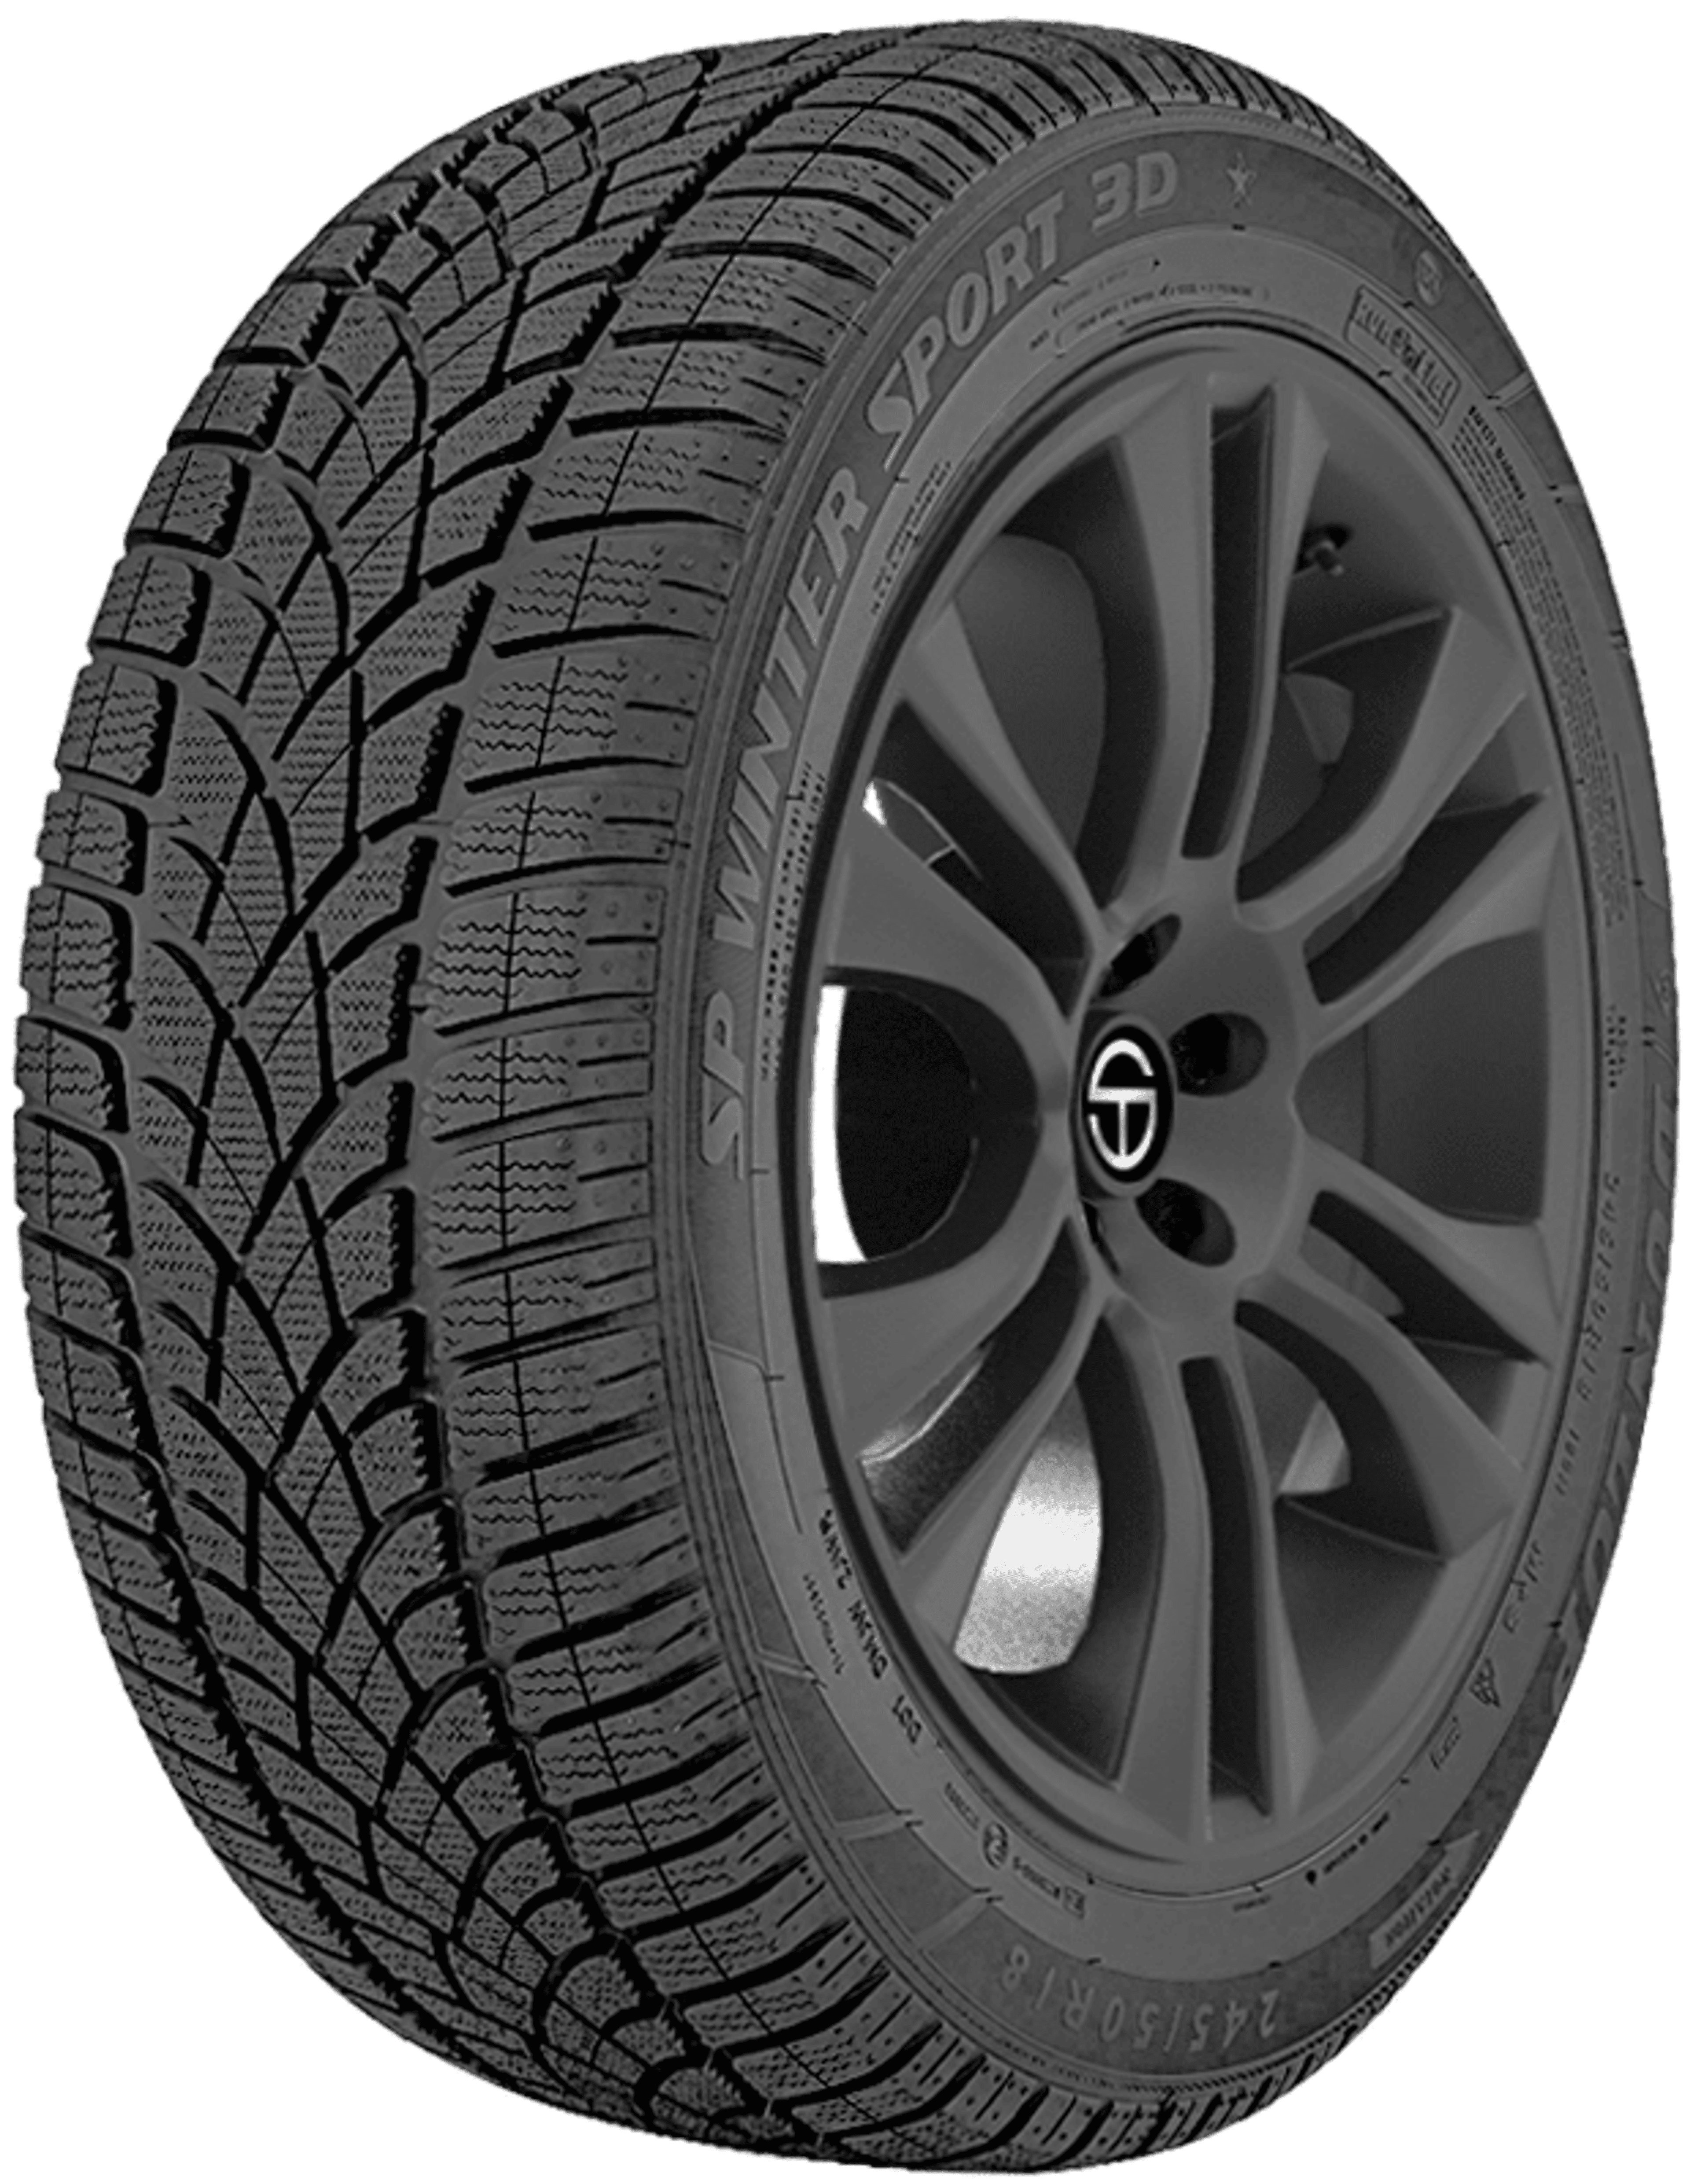 SP | 3D Tires Dunlop Buy Winter SimpleTire Sport Online